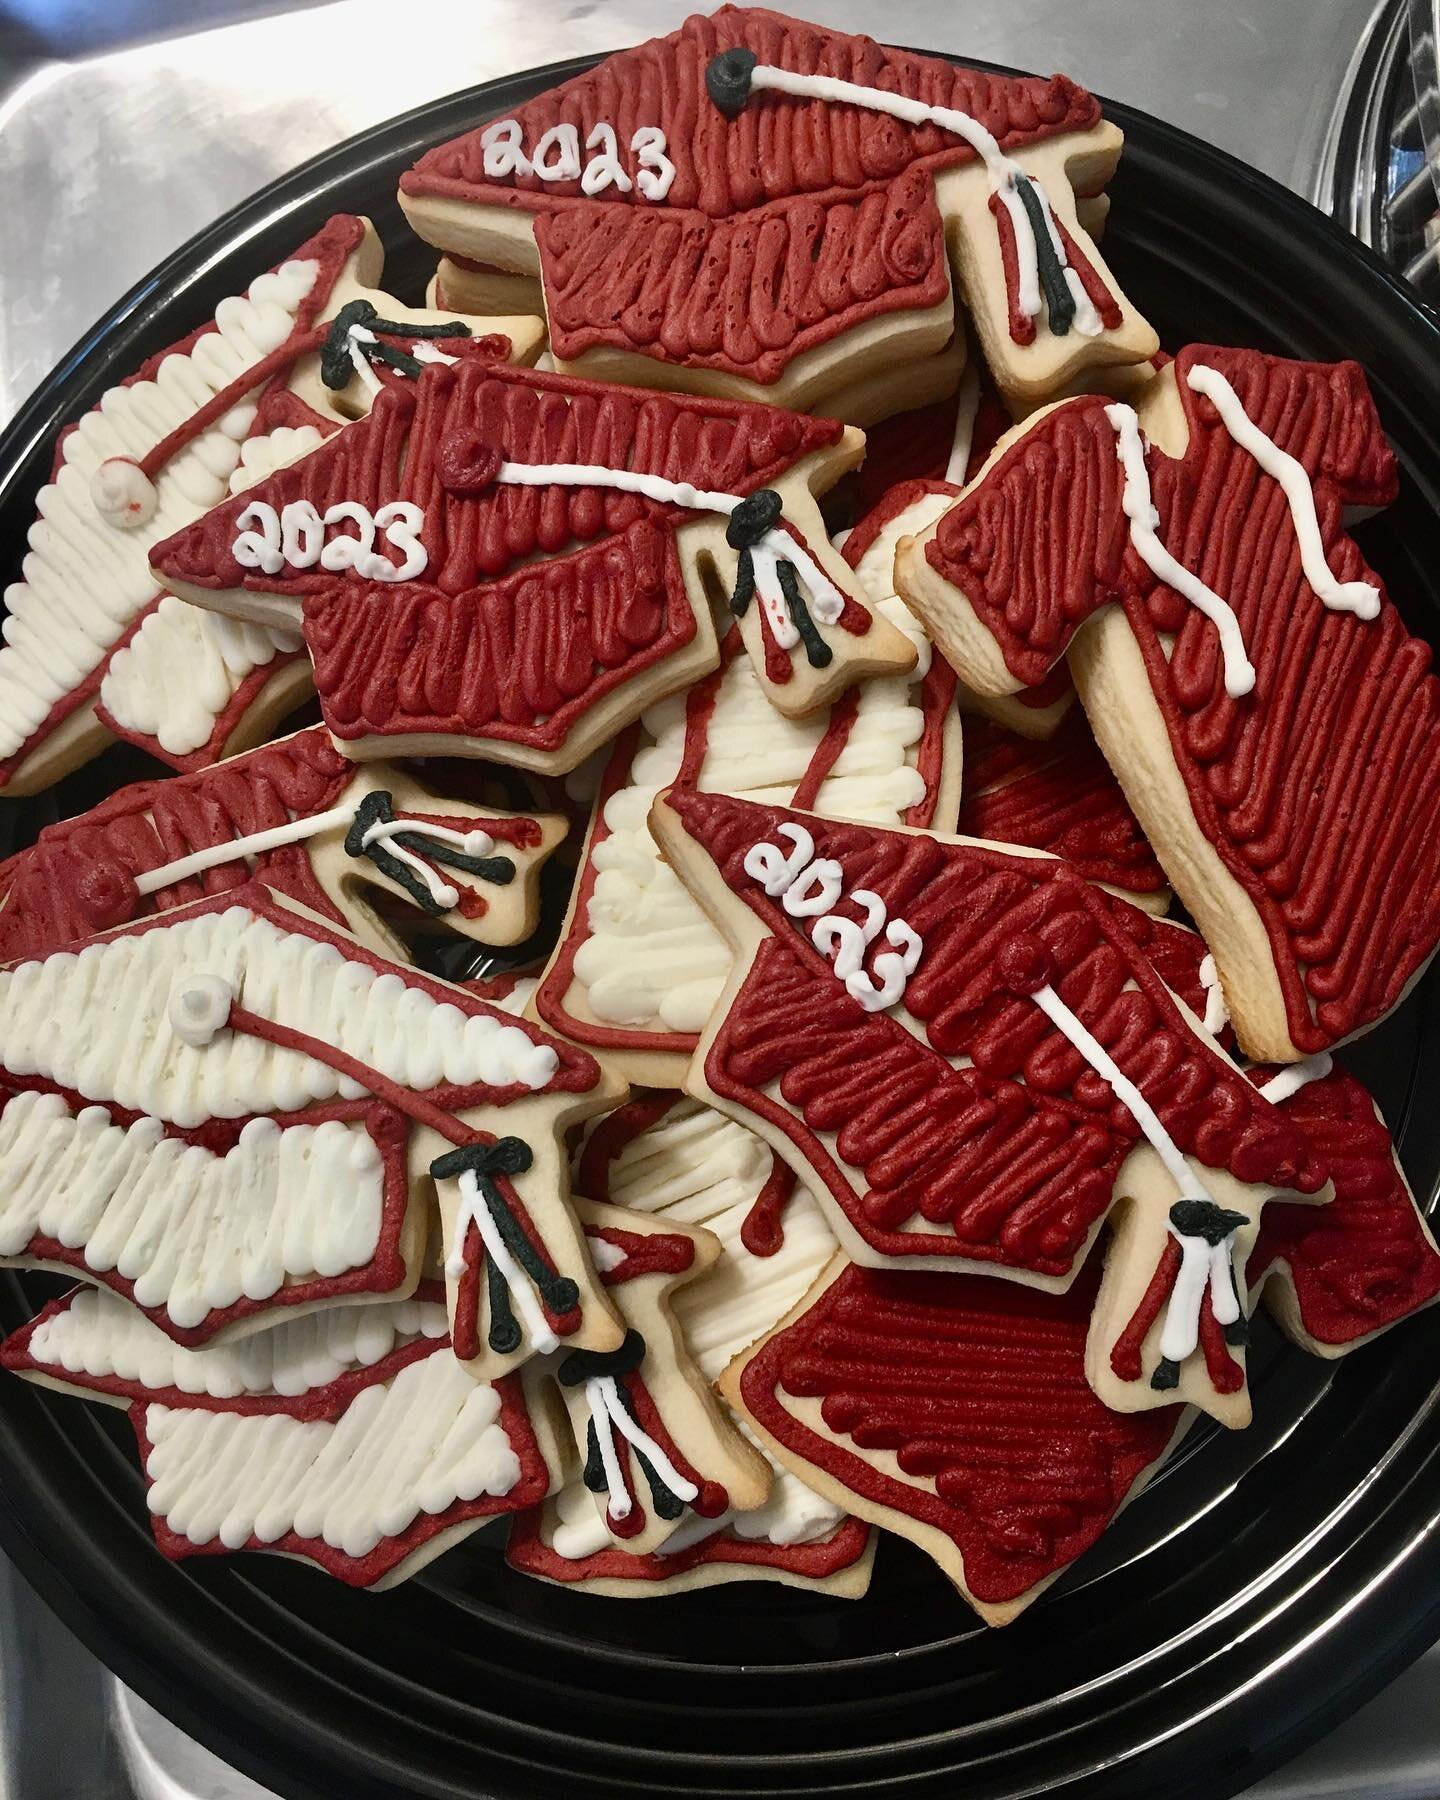 Buttercream Caps and Gowns! ✨🎓
.
.
.
#buttercreamcookies #almondsugarcookies #homebaker #decorate #graduation